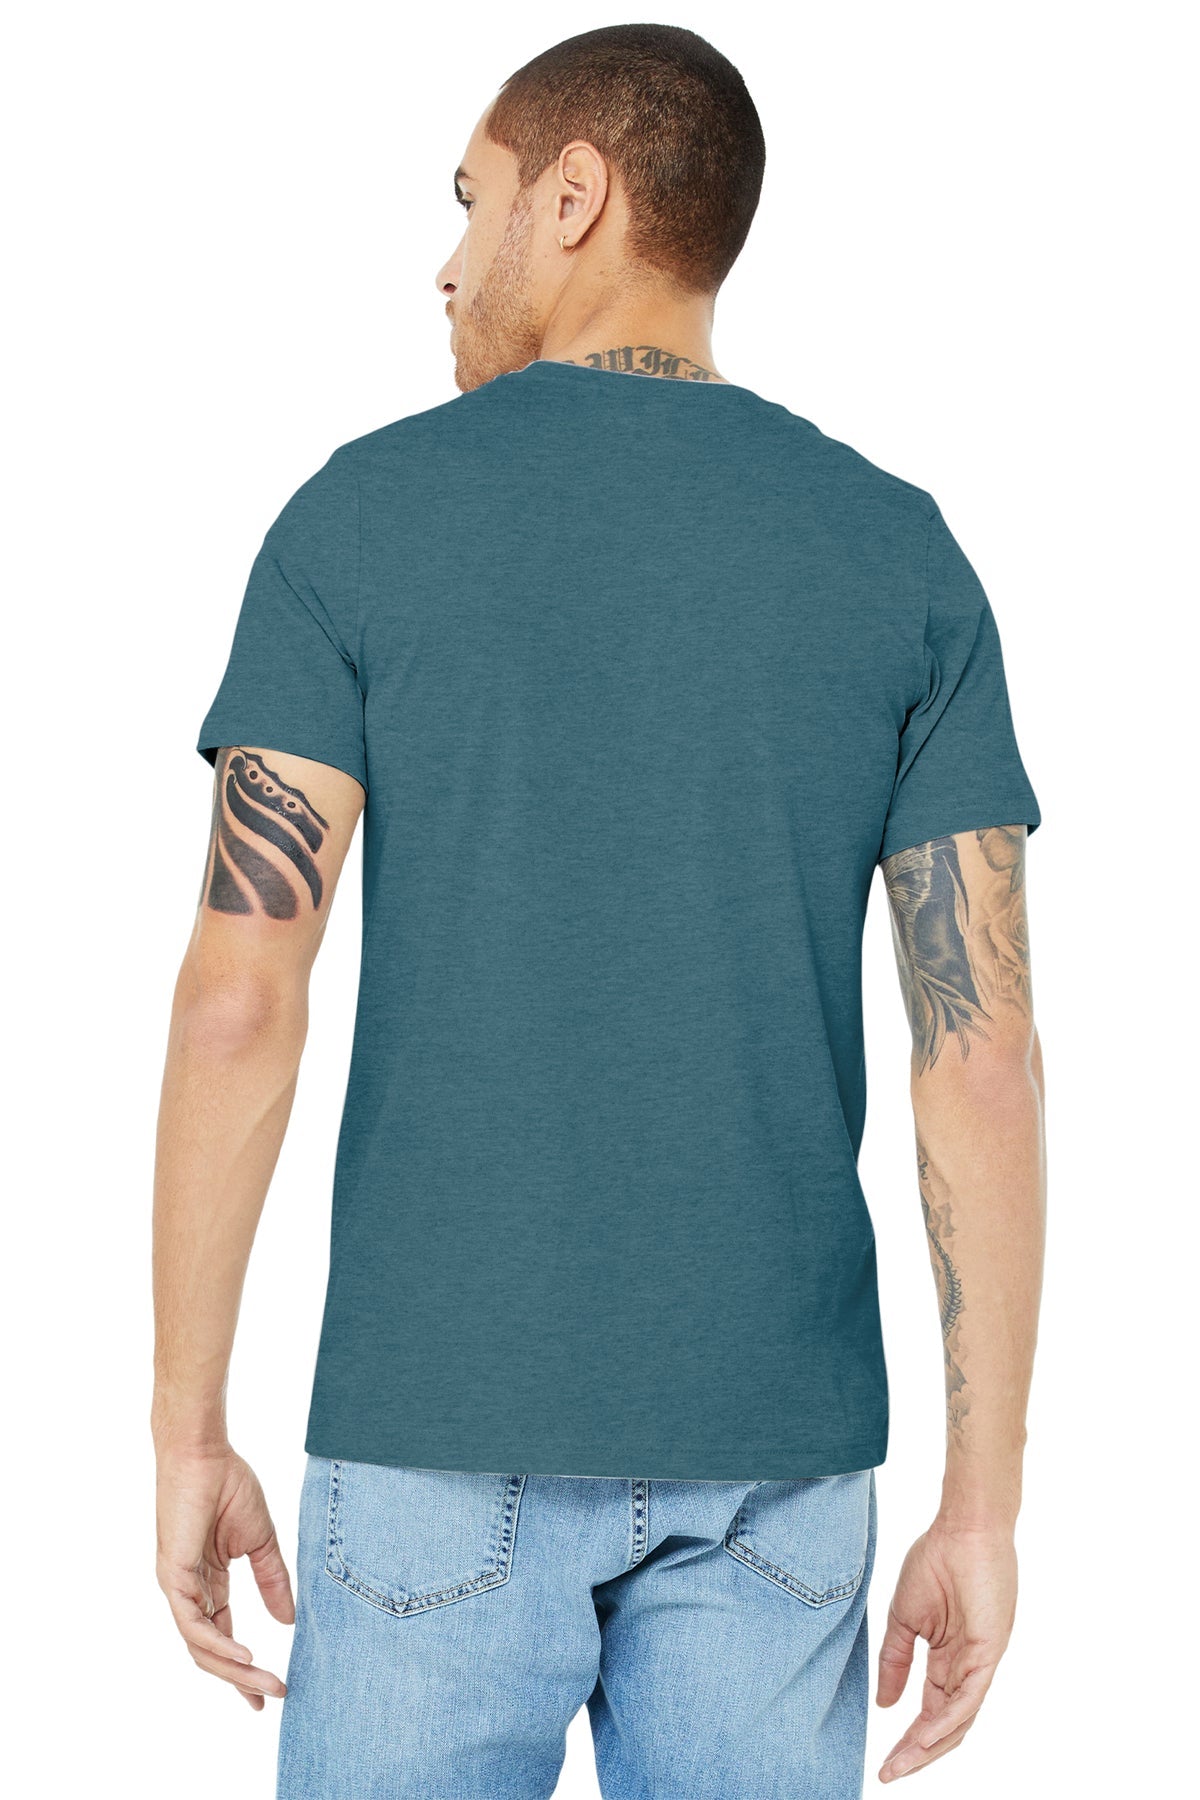 bella + canvas unisex jersey short sleeve t-shirt 3001c heather slate